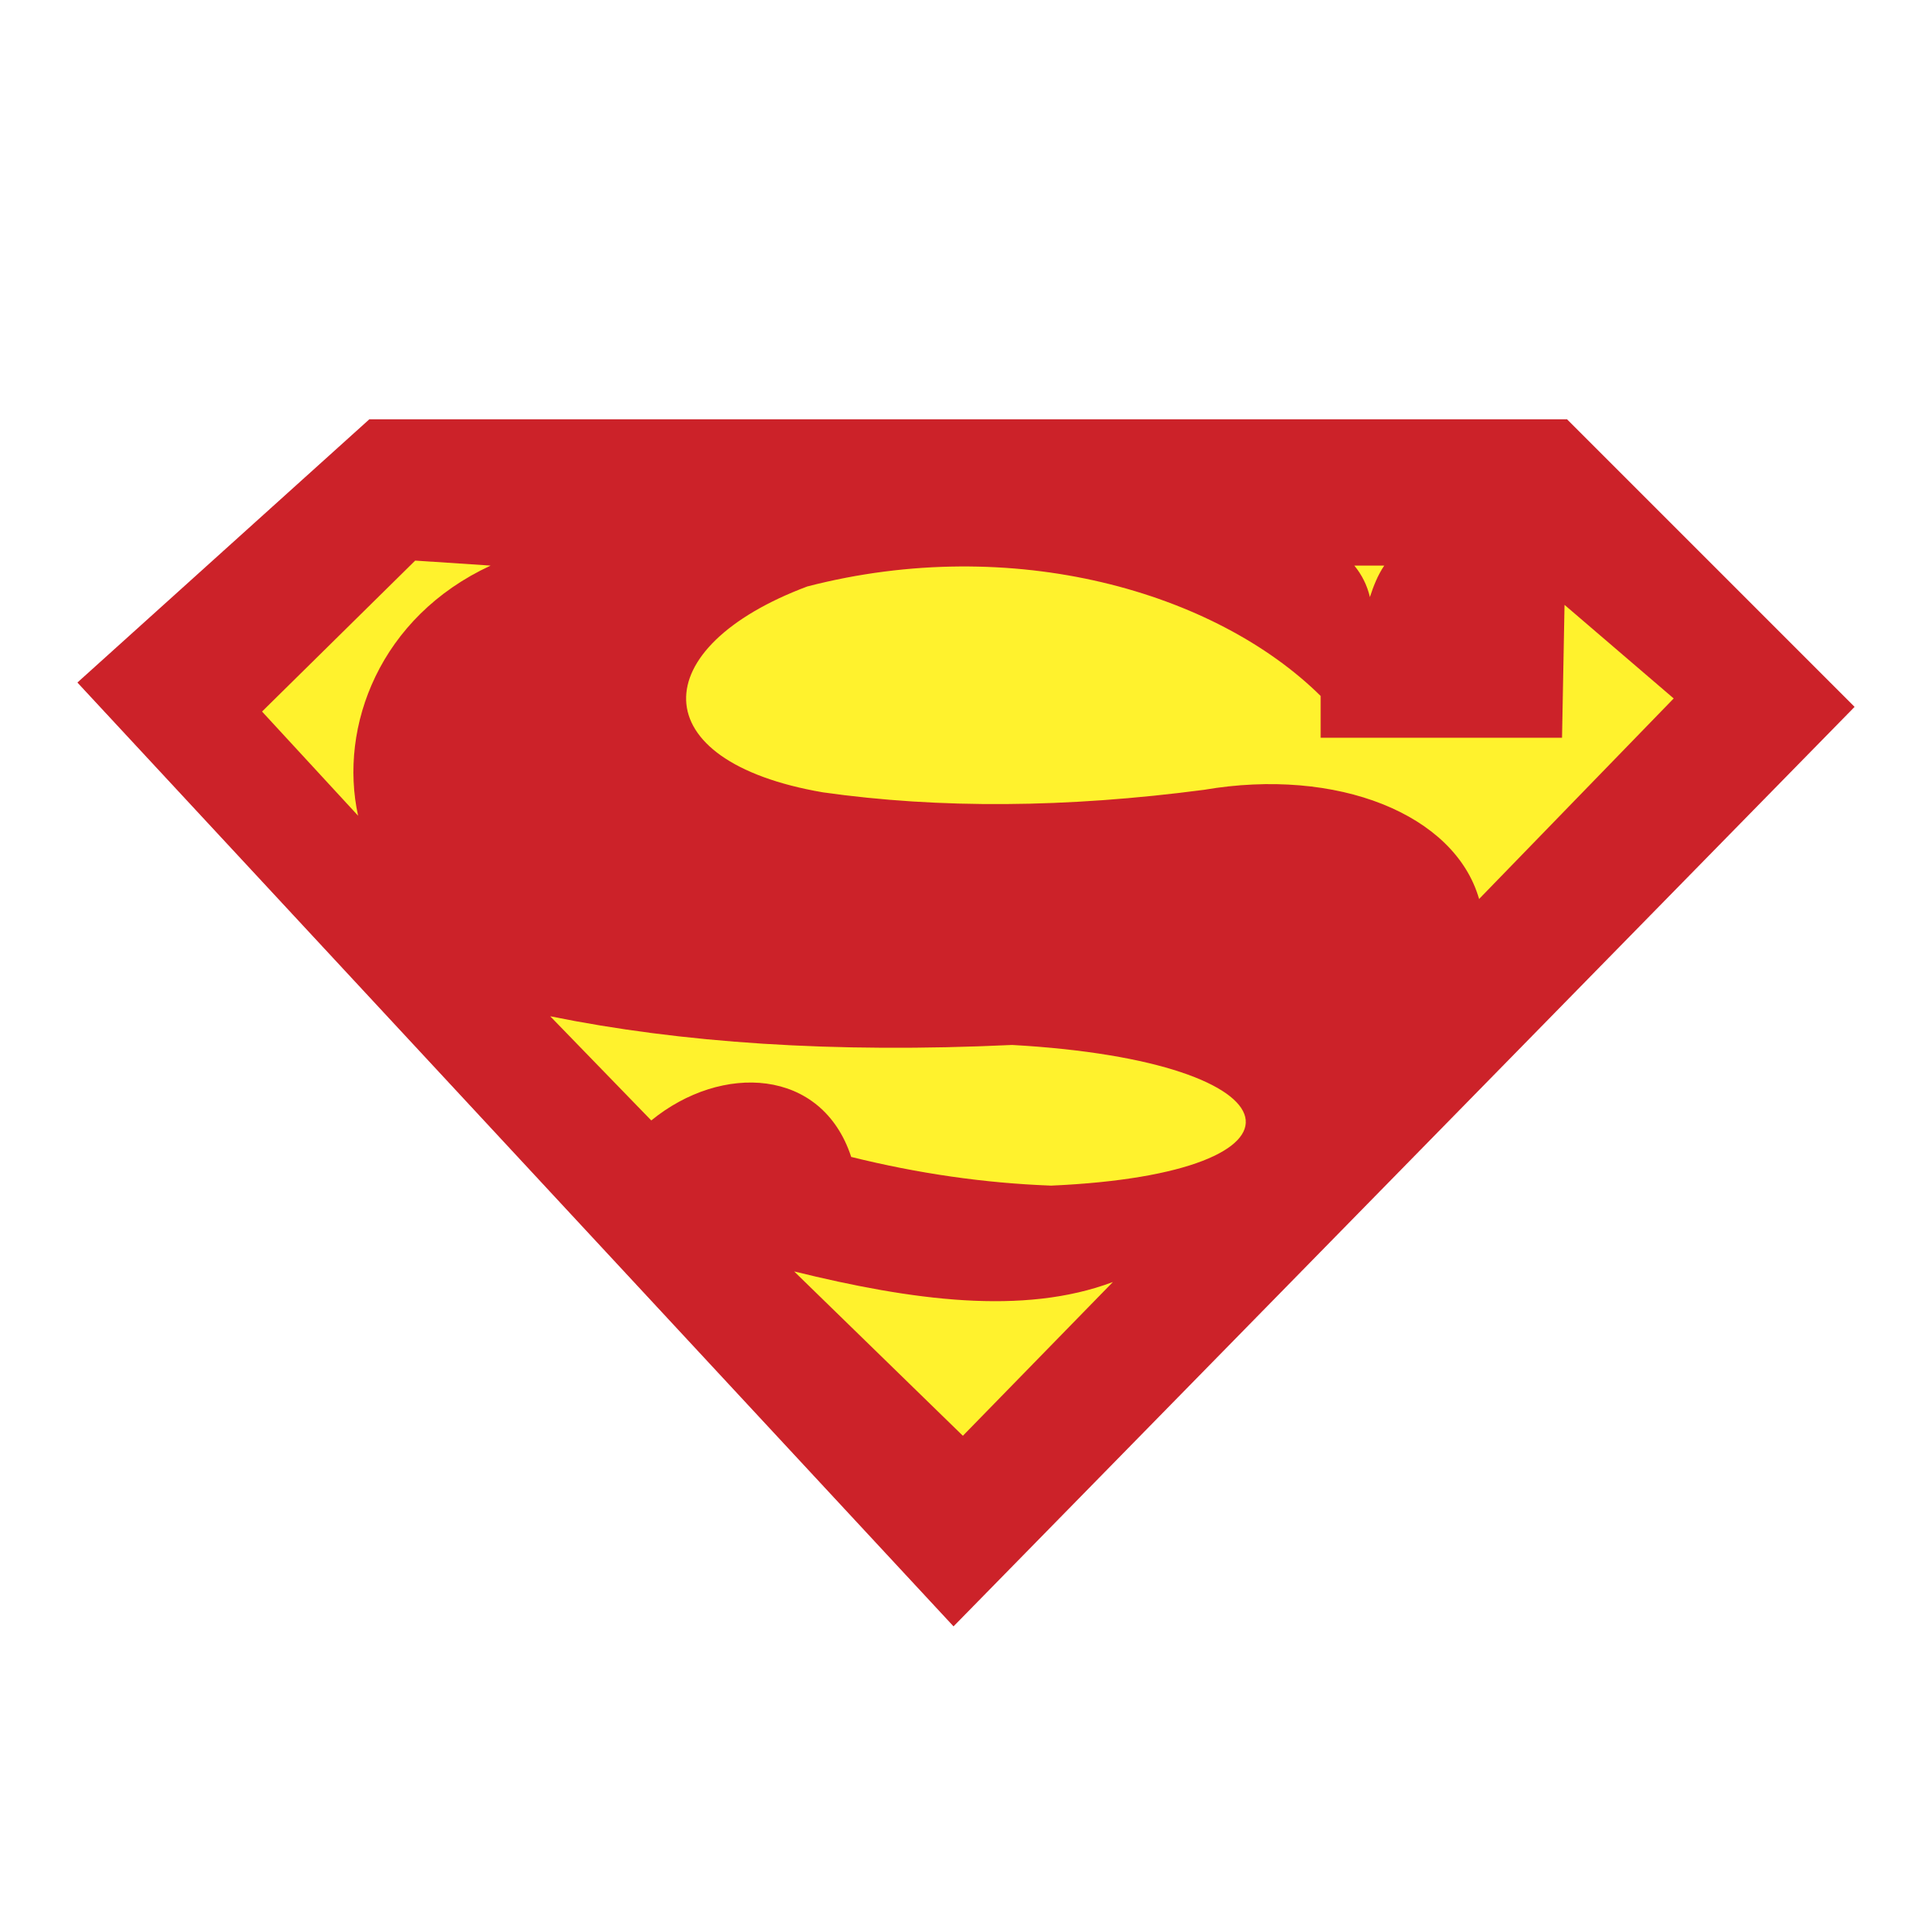 Red Black and White Superman Logo - Superman Logo PNG Transparent & SVG Vector - Freebie Supply